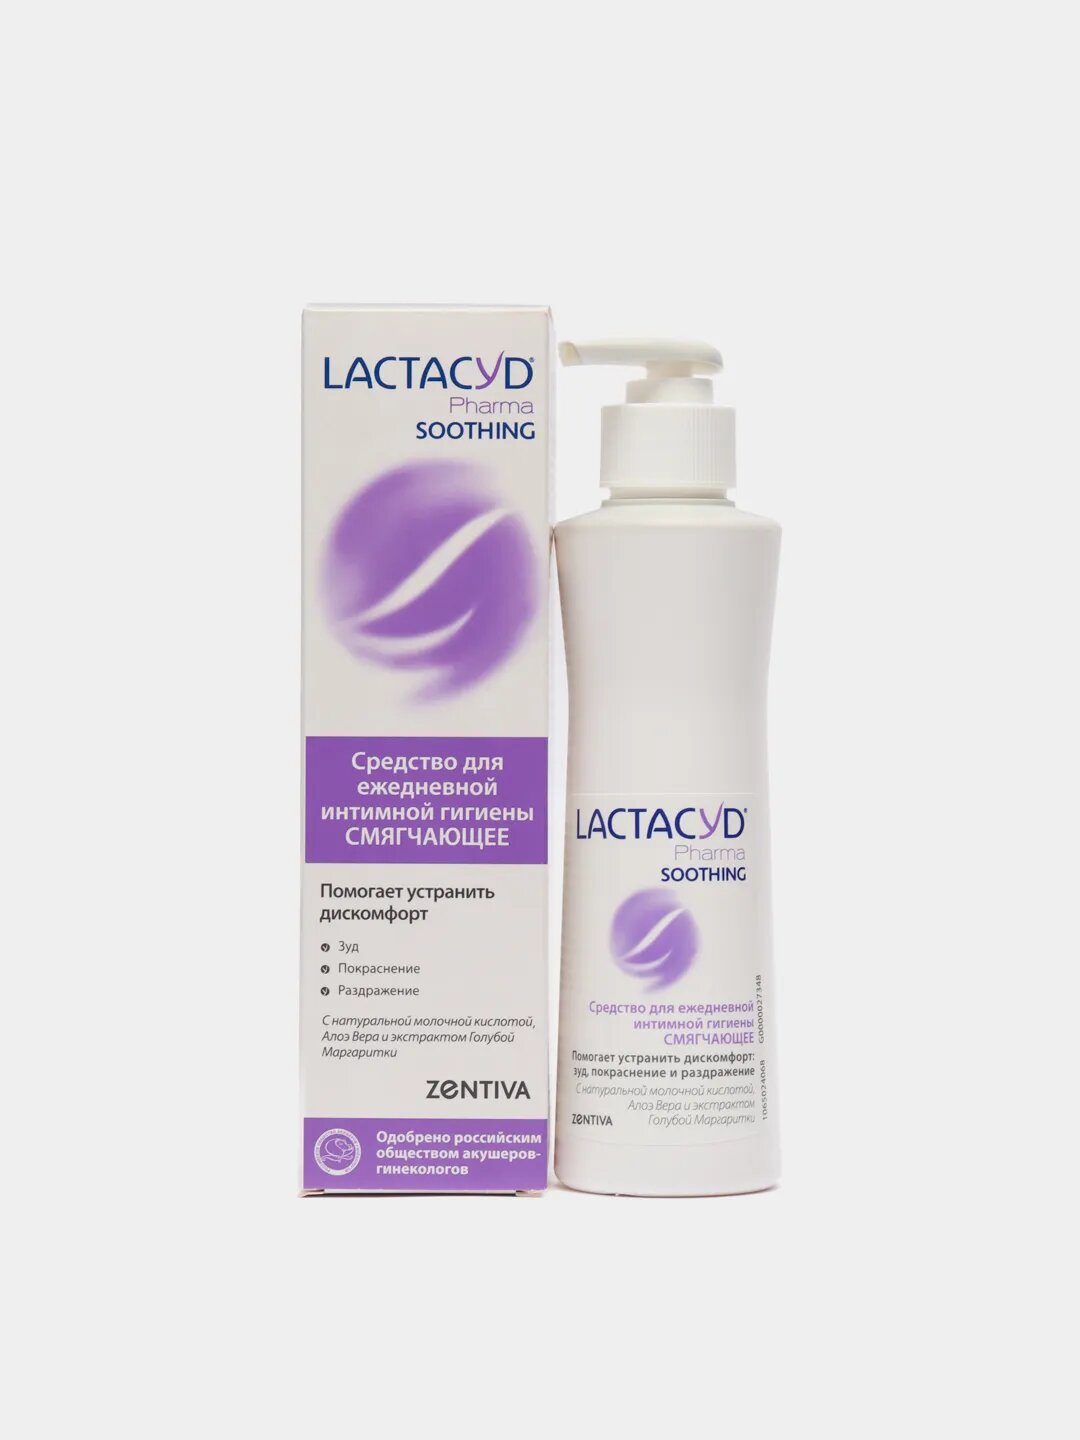 Lactacyd средство для интимной гигиены Pharma Soothing, бутылка, 315 г, 250 мл